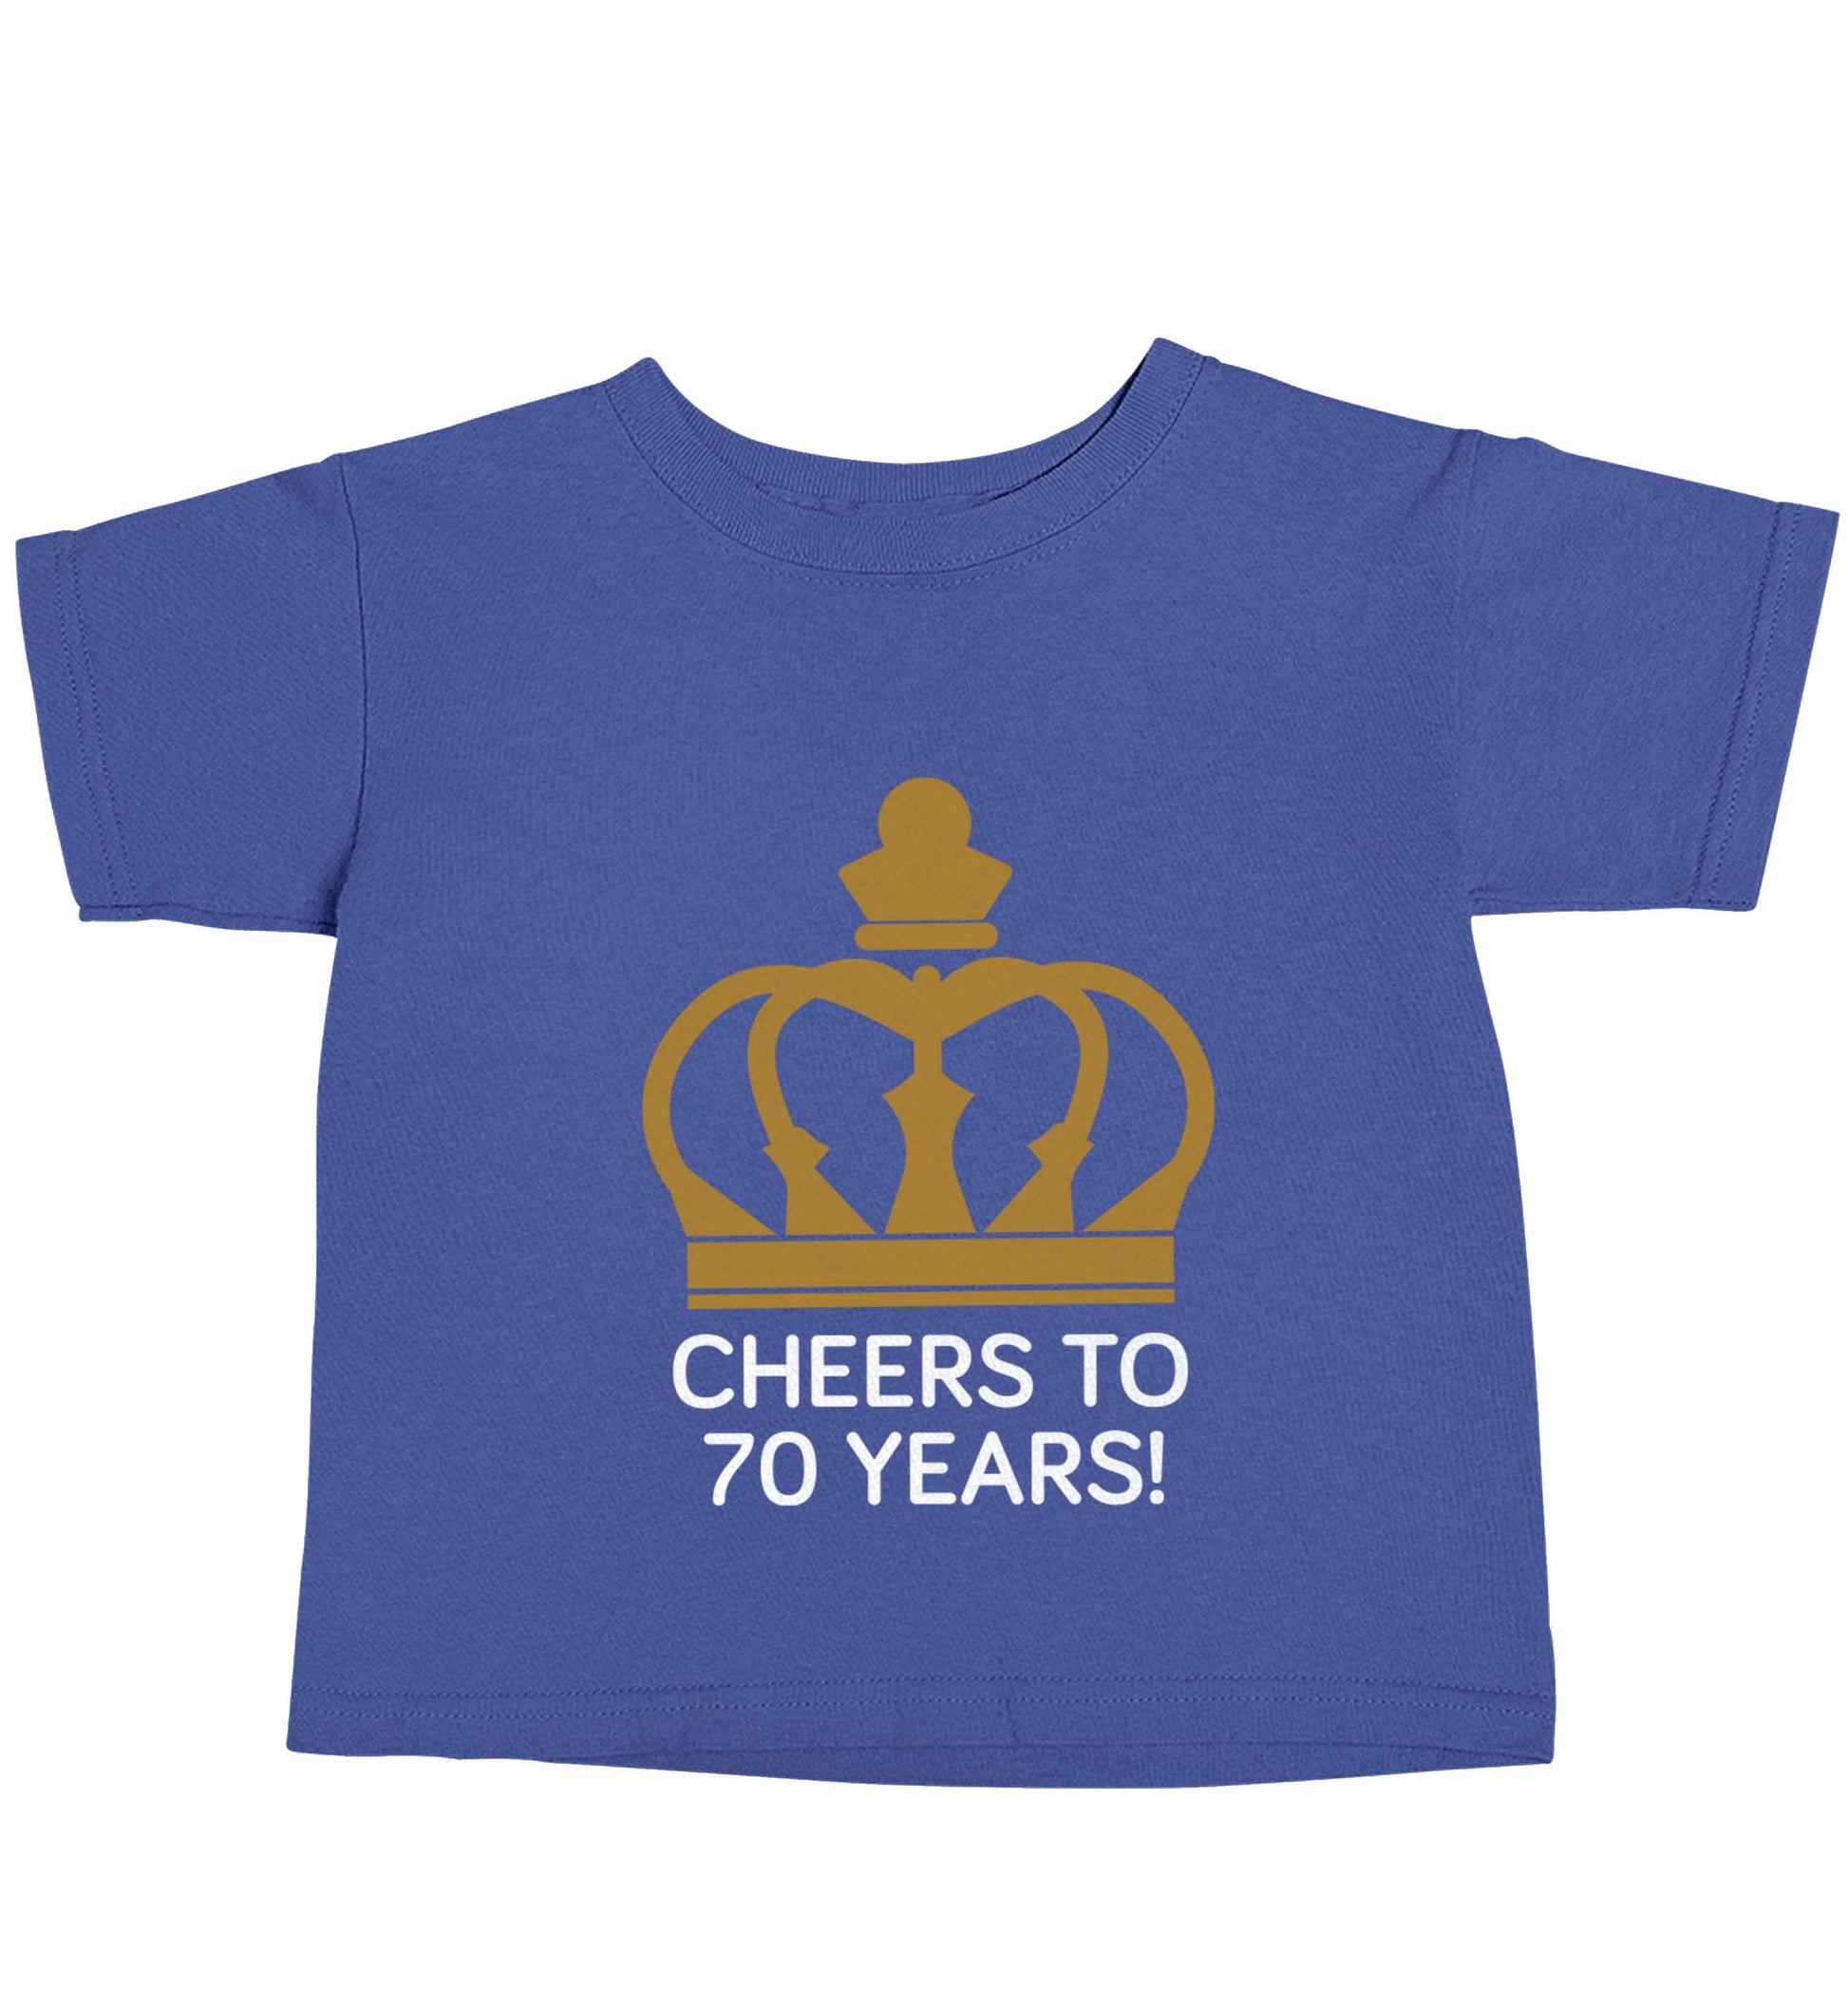 Cheers to 70 years! blue baby toddler Tshirt 2 Years